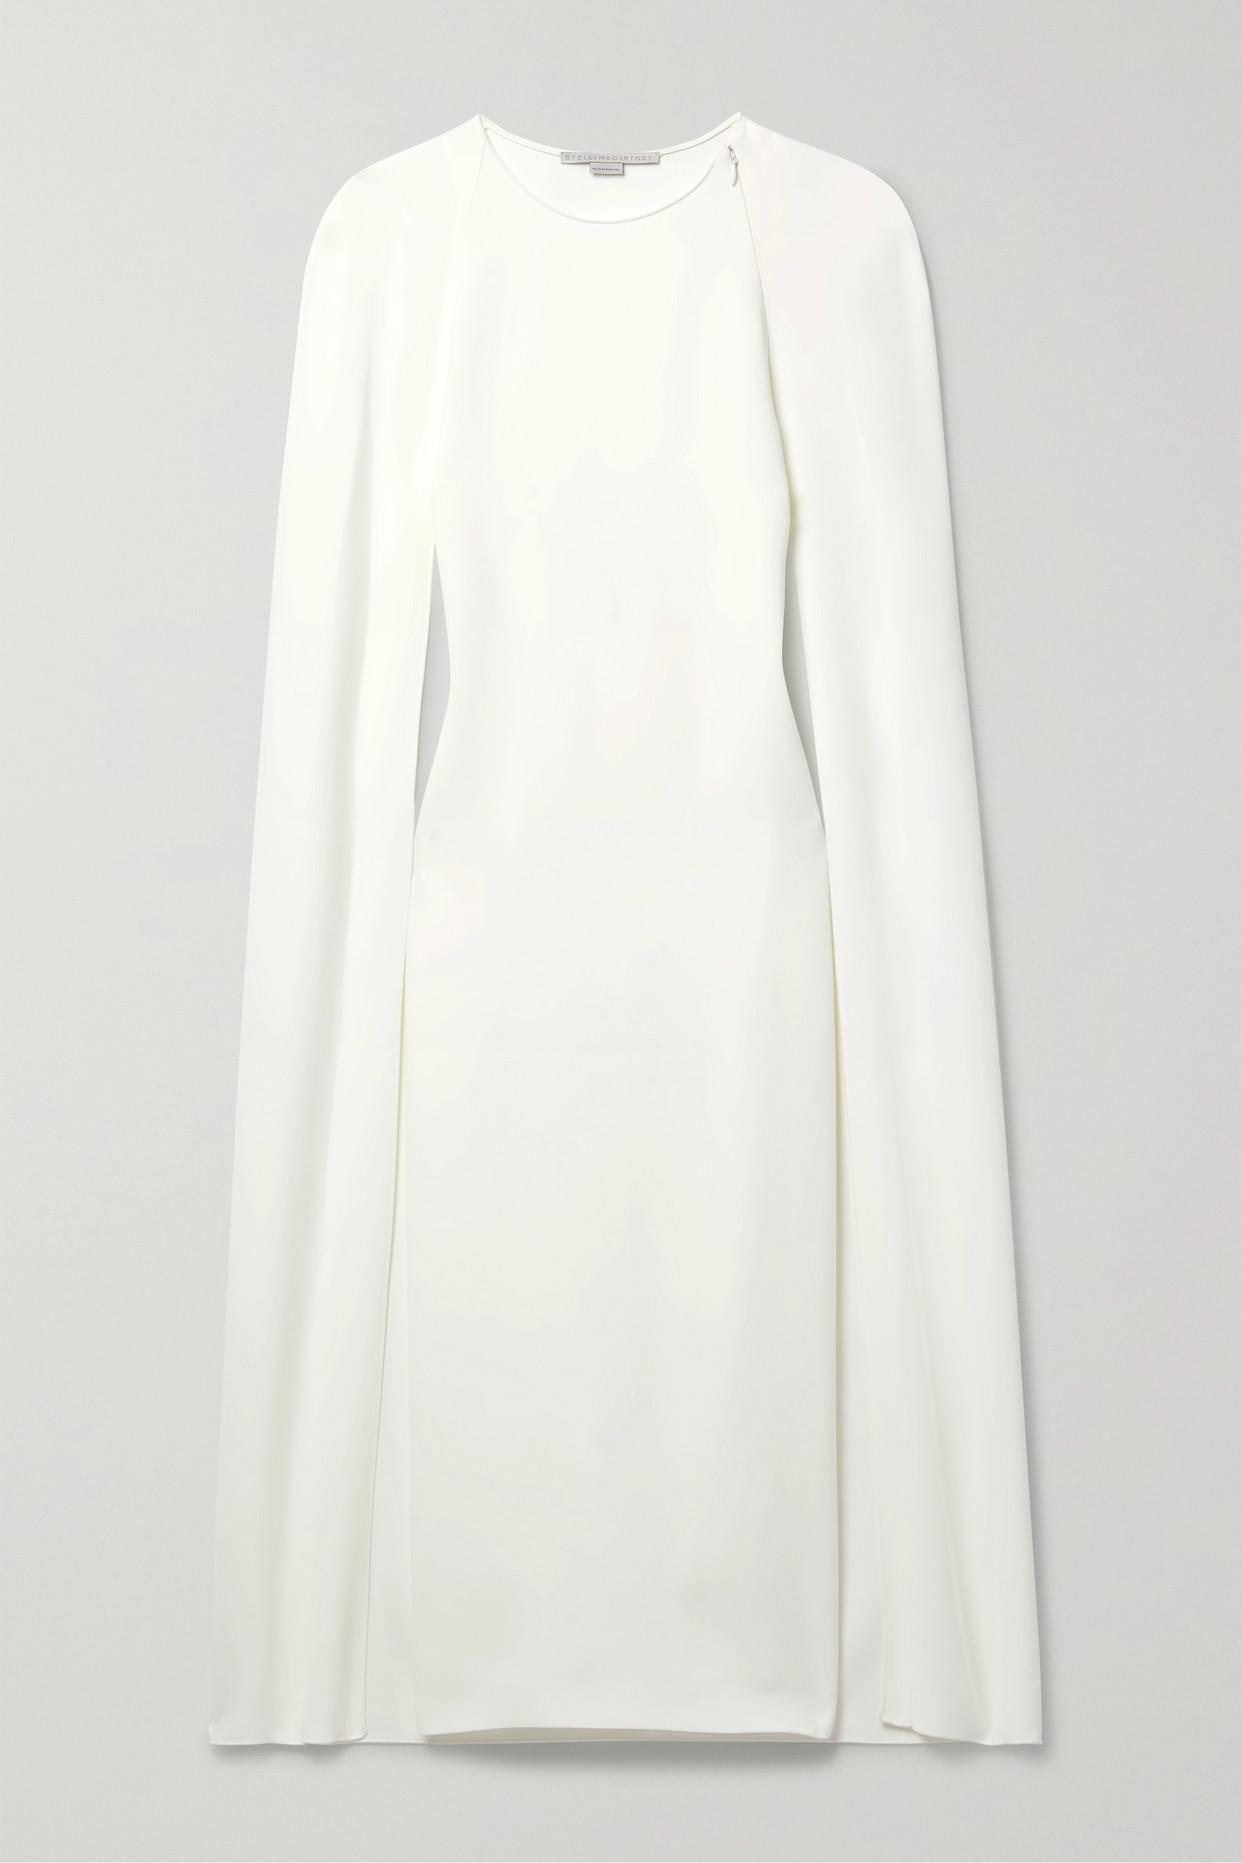 Stella McCartney + Net Sustain Cape-effect Crepe Midi Dress in White ...